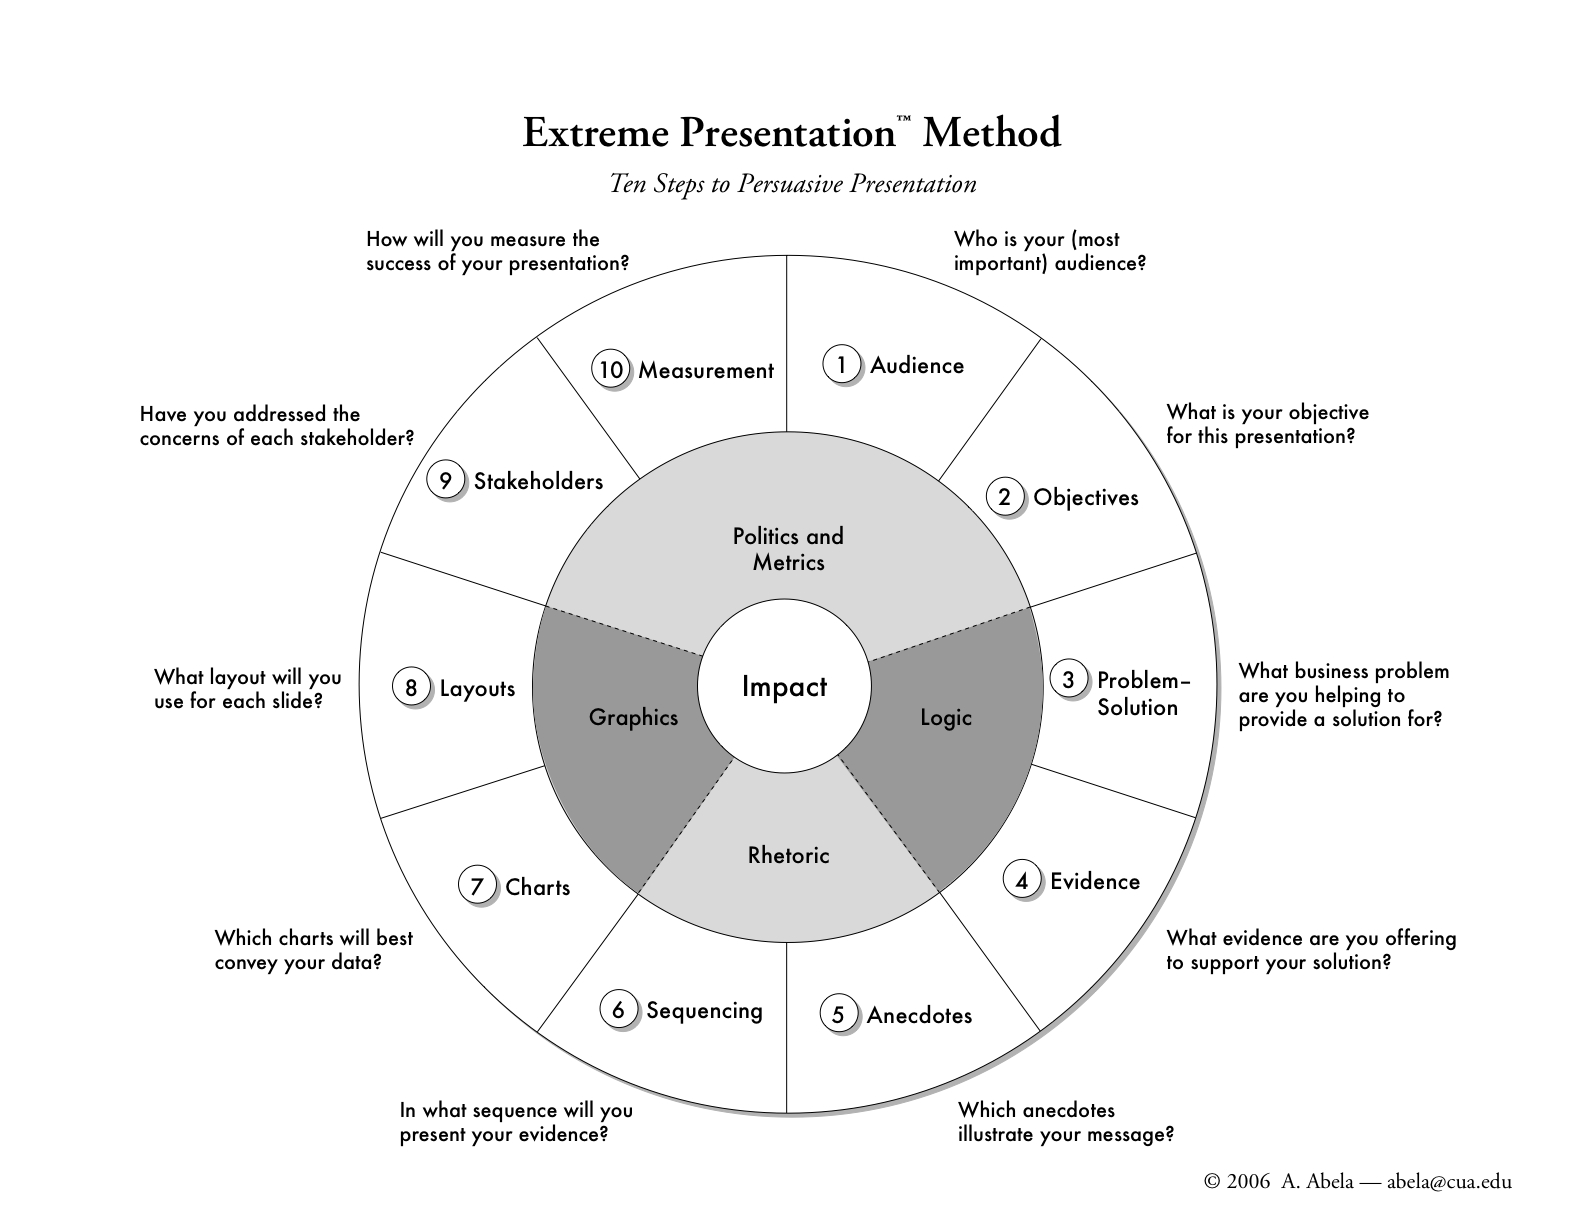 the extreme presentation method